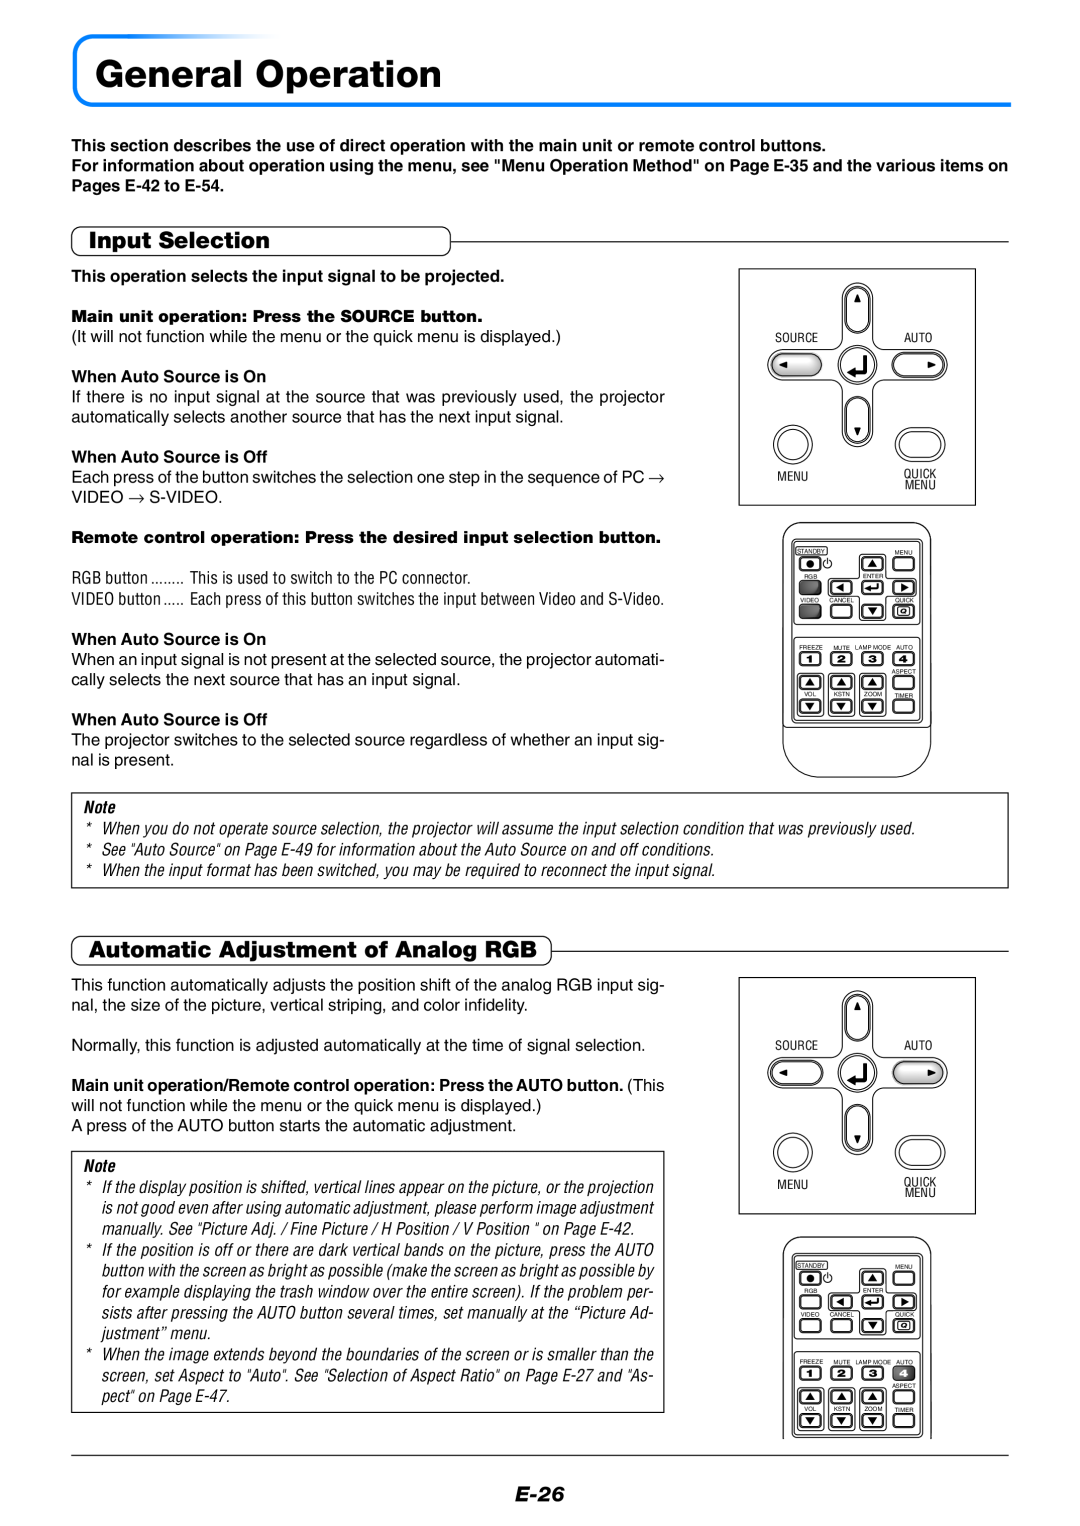 Mitsubishi Electronics XD60U user manual General Operation, Input Selection, Automatic Adjustment of Analog RGB, E-26 